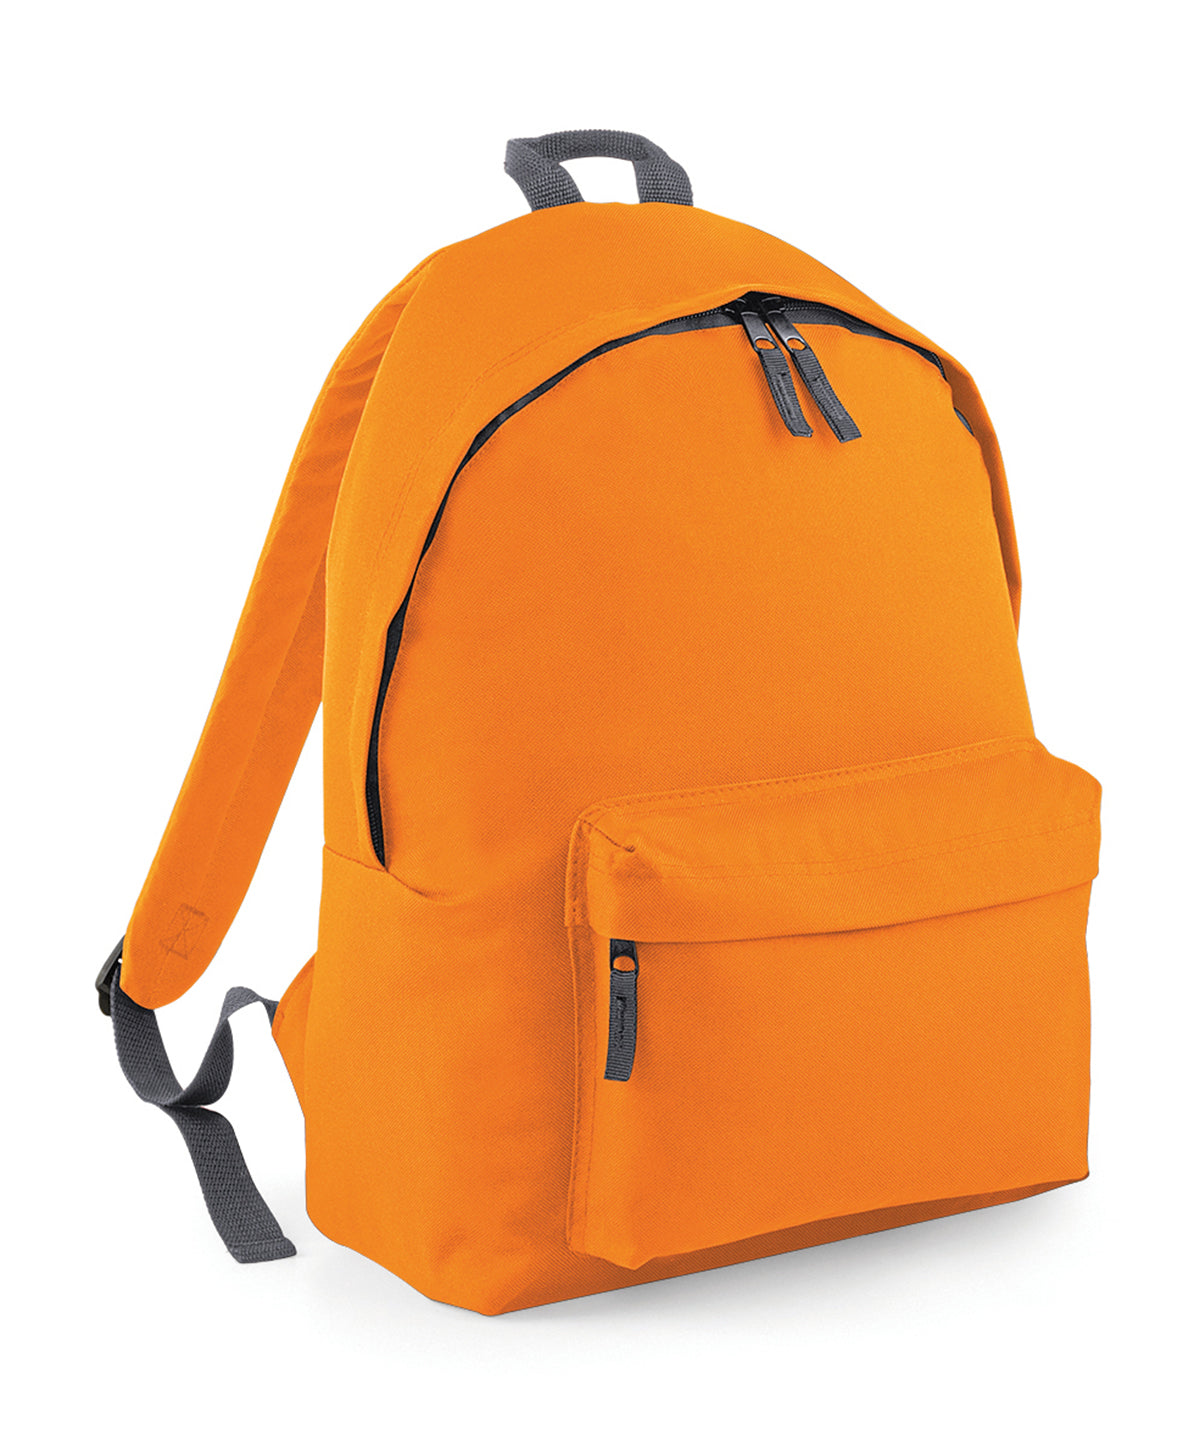 Personalised Bags - Mid Orange Bagbase Original fashion backpack